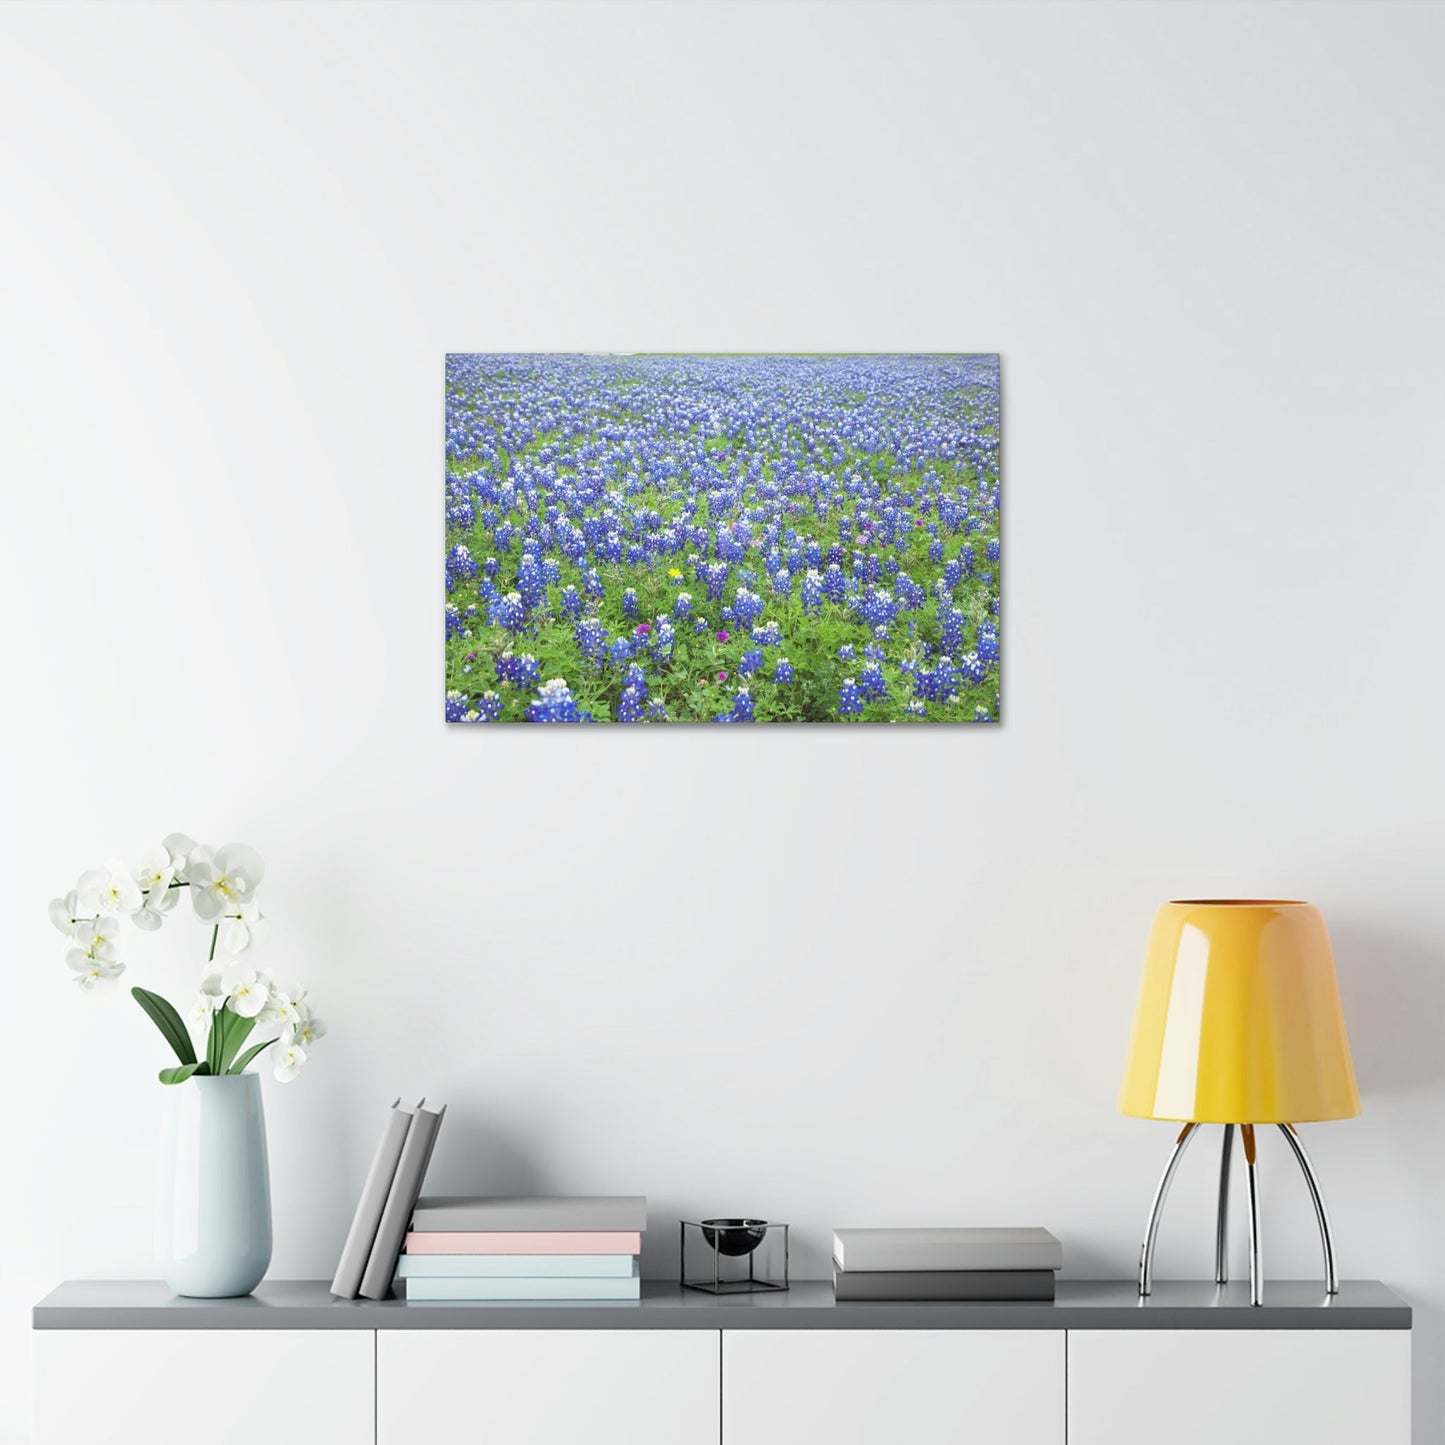 Bluebonnet Garden: Colorful Print on Canvas of a Flower-Filled Landscape